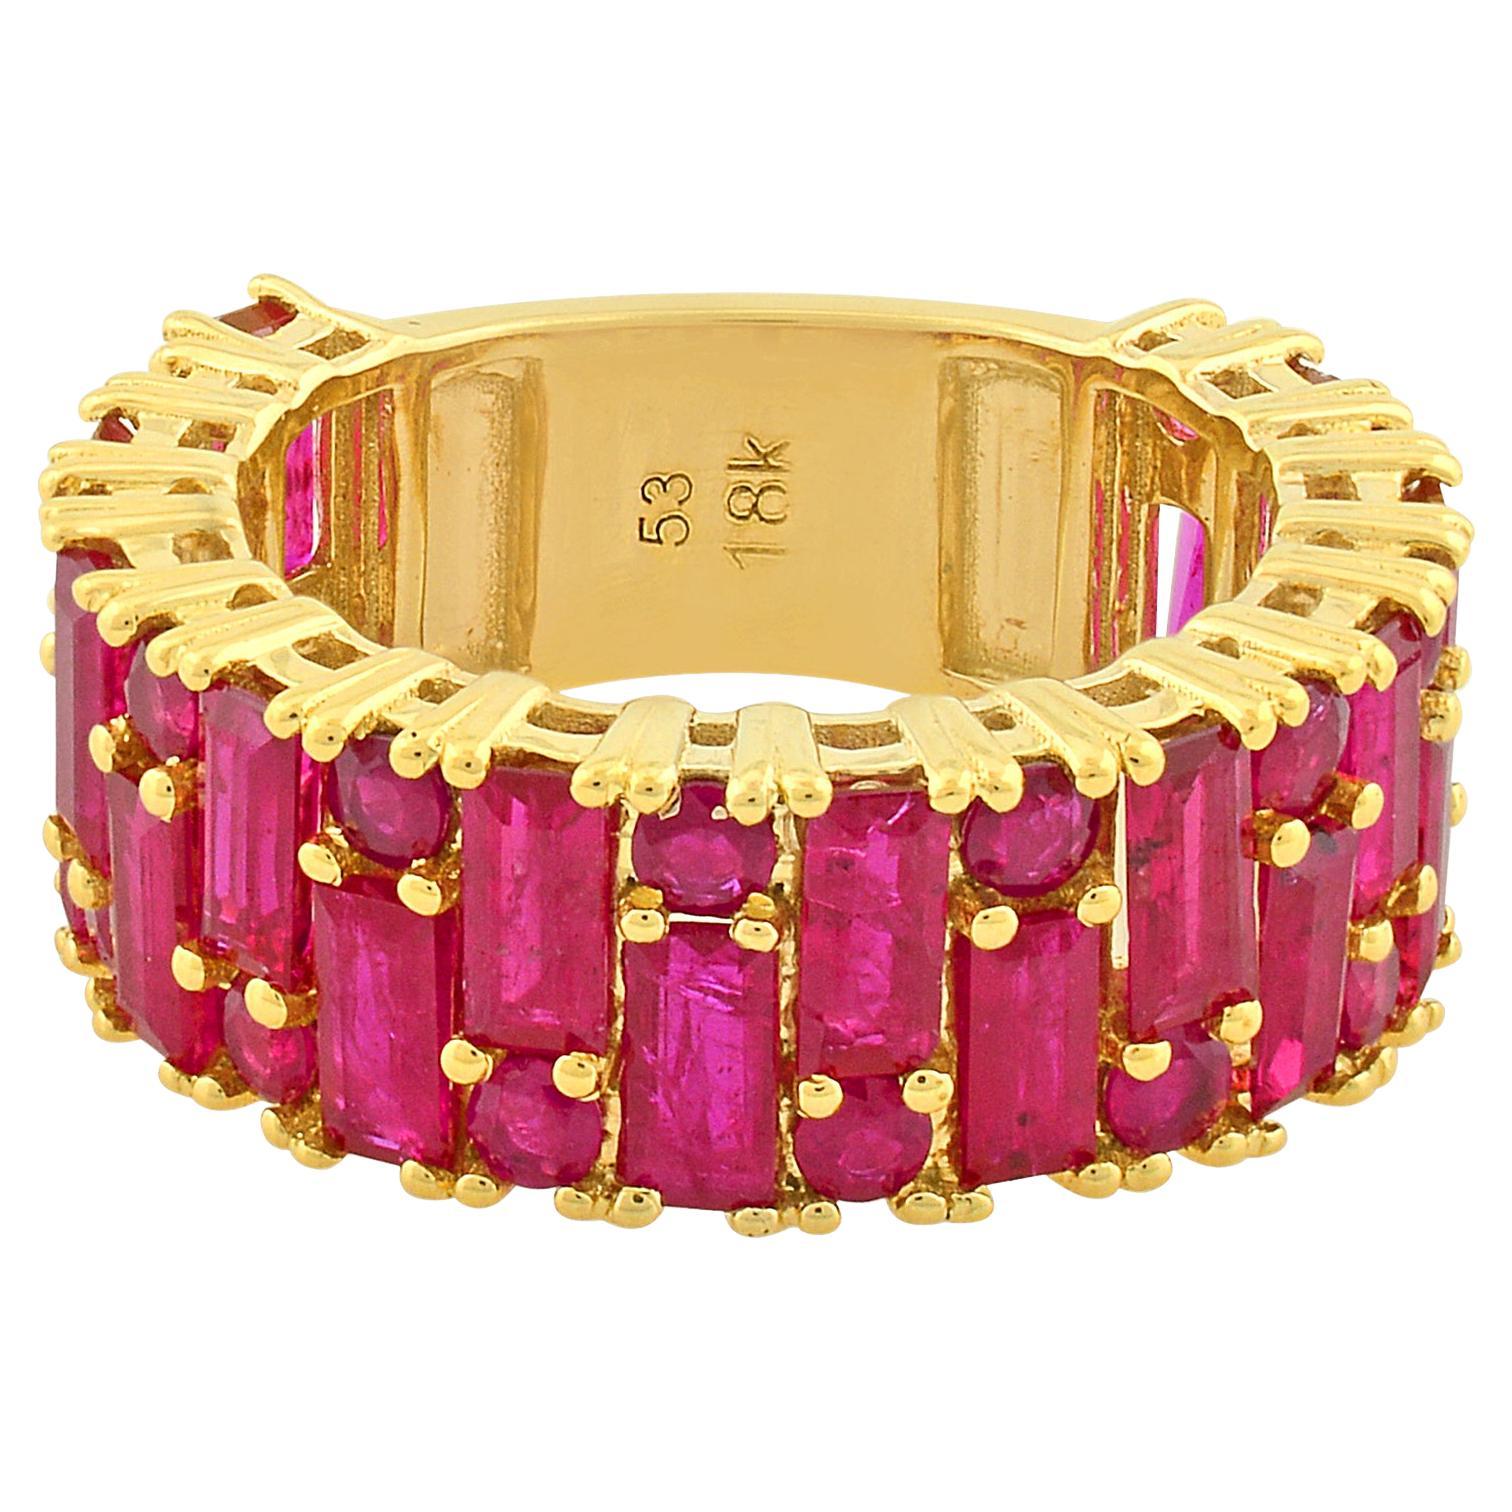 5.76 Carat Ruby Gemstone Band Ring Solid 18k Yellow Gold Handmade Fine Jewelry